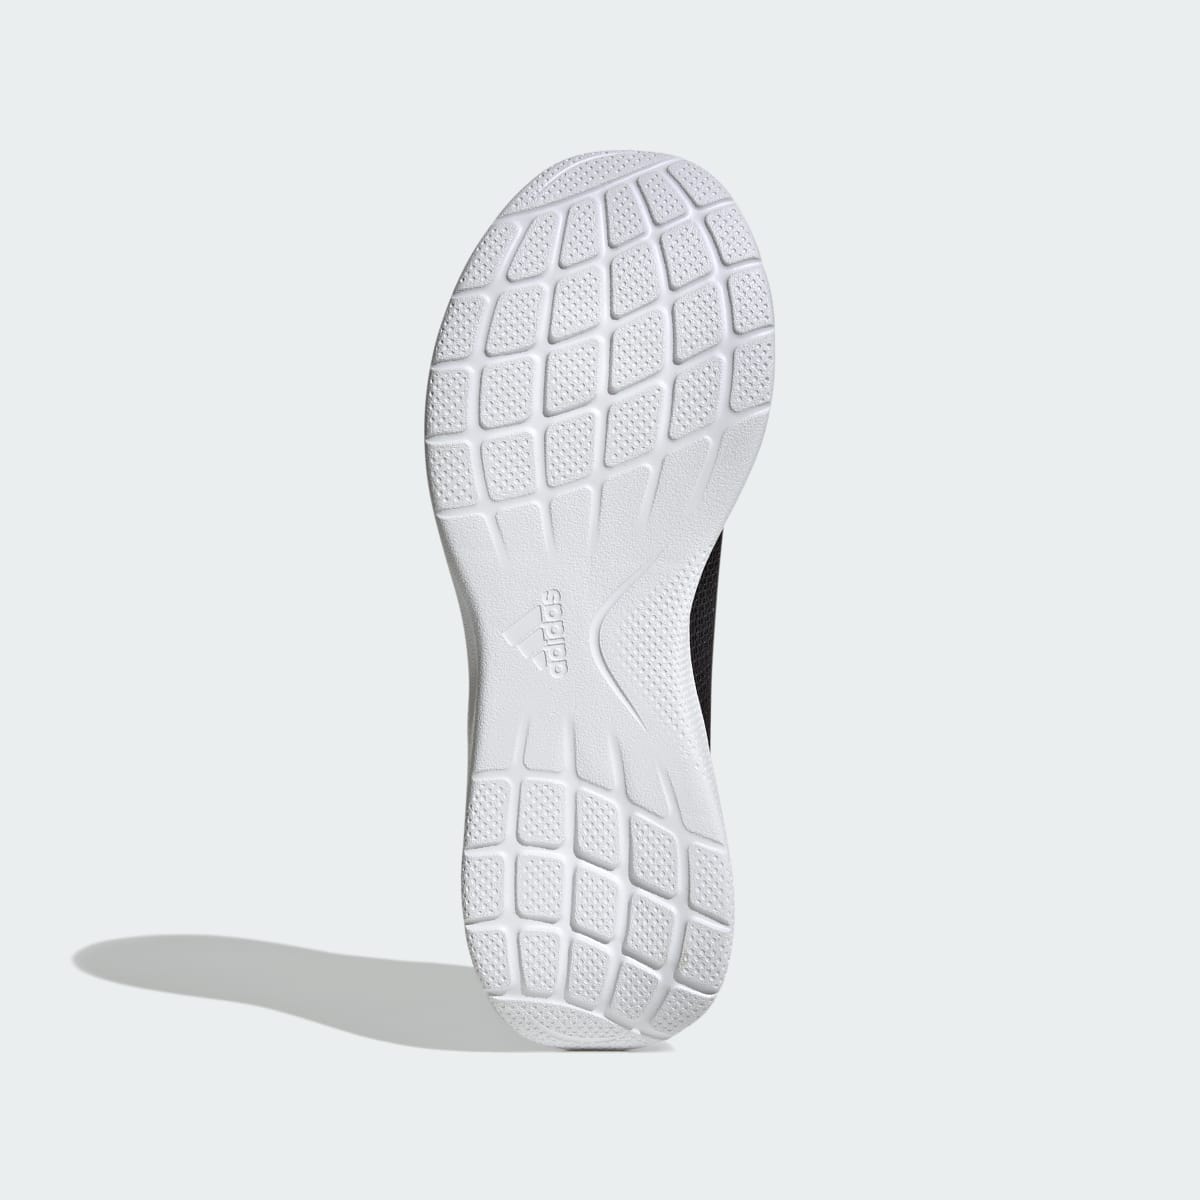 Adidas Puremotion 2.0 Schuh. 4